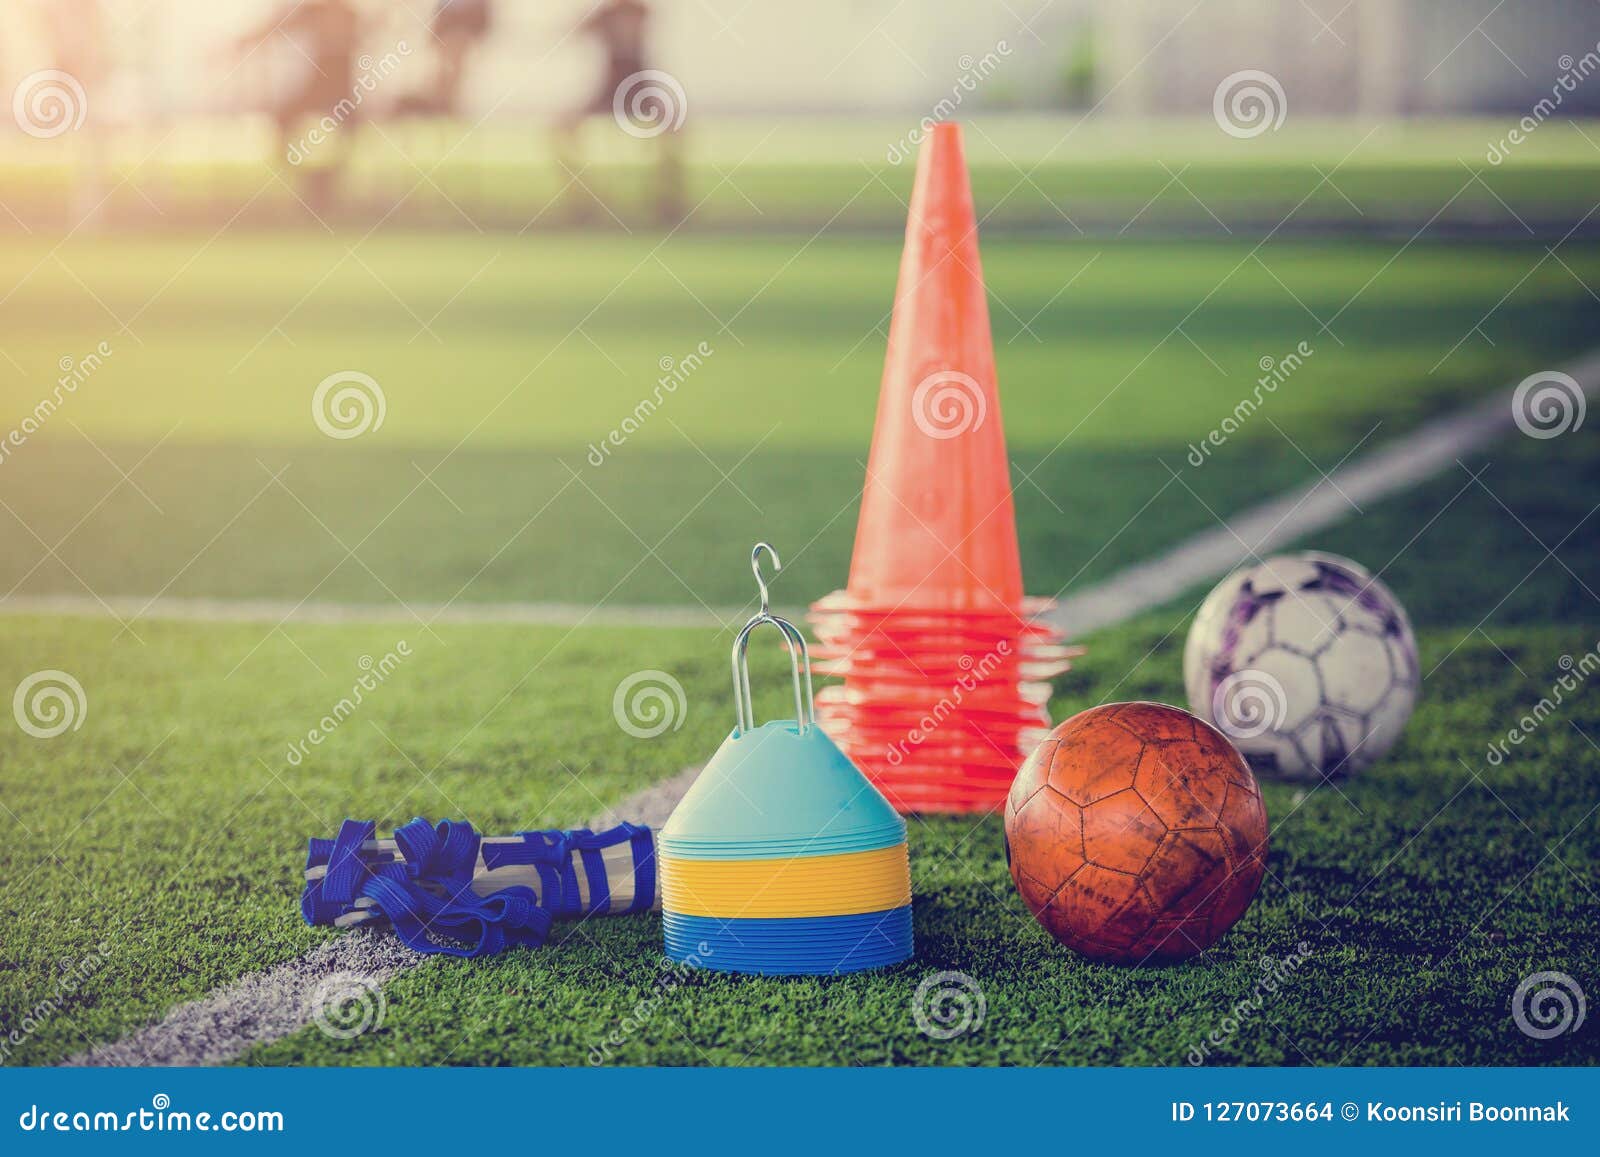 Soccer Player Uniform Sport Equipment For Football Stock Illustration -  Download Image Now - iStock